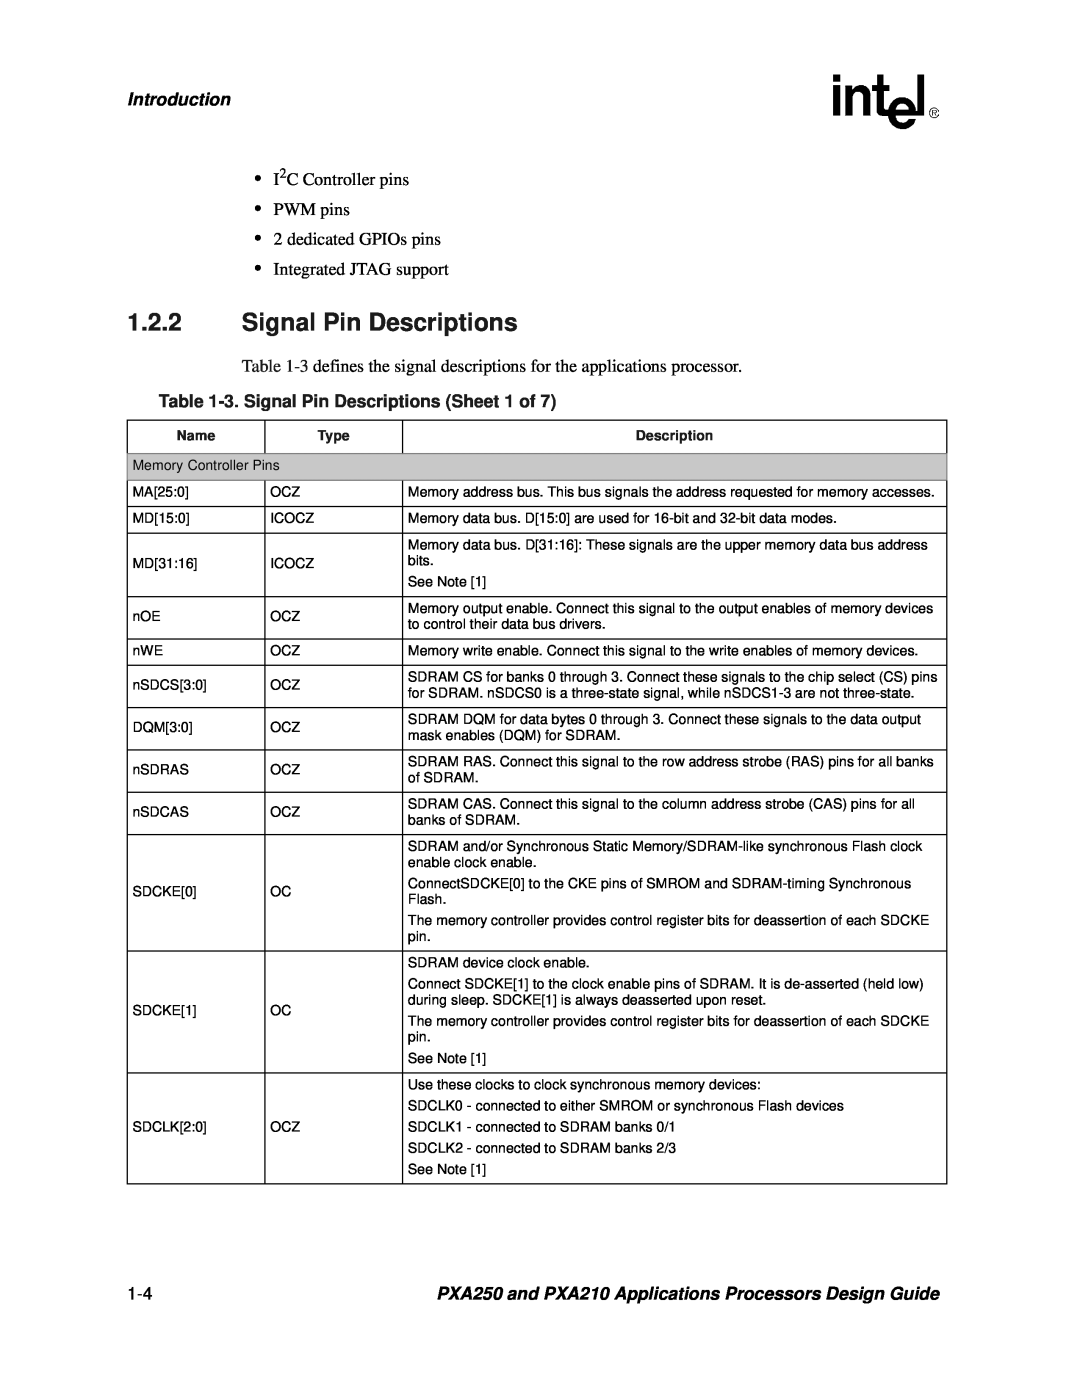 Intel PXA250 and PXA210 manual Introduction, 3. Signal Pin Descriptions Sheet 1 of 